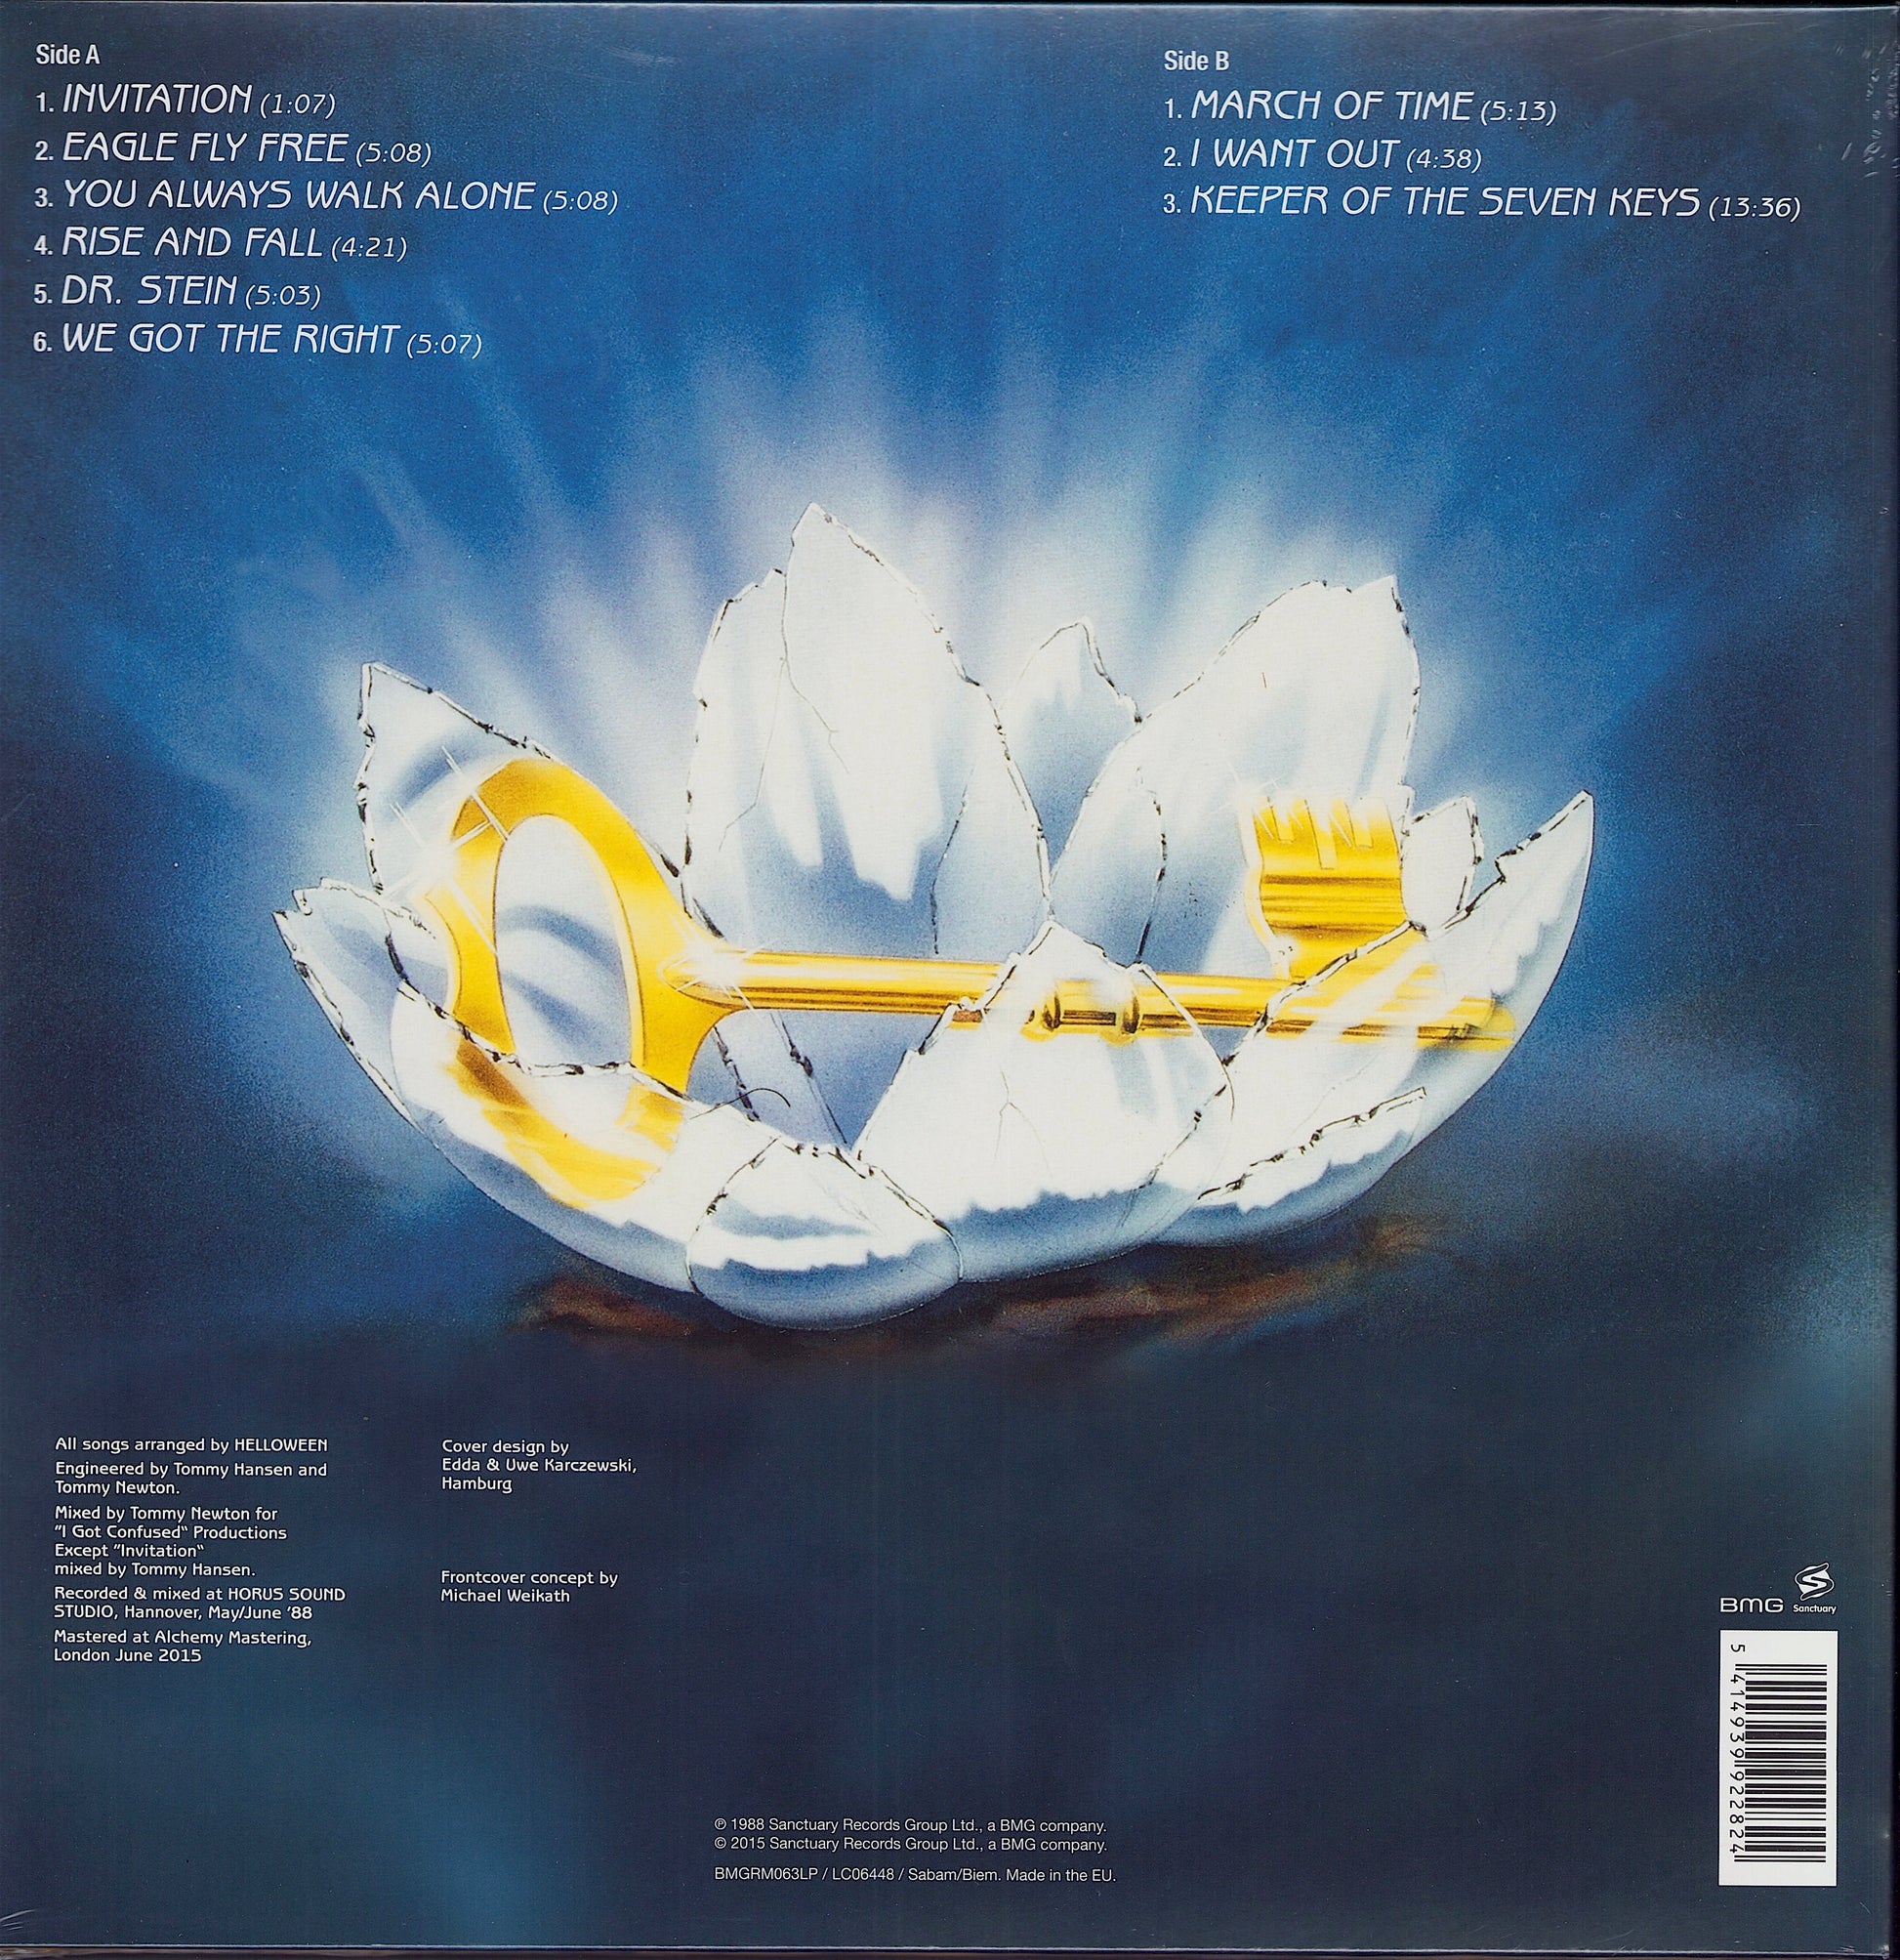 Helloween - Keeper Of The Seven Keys Part II Vinyl LP